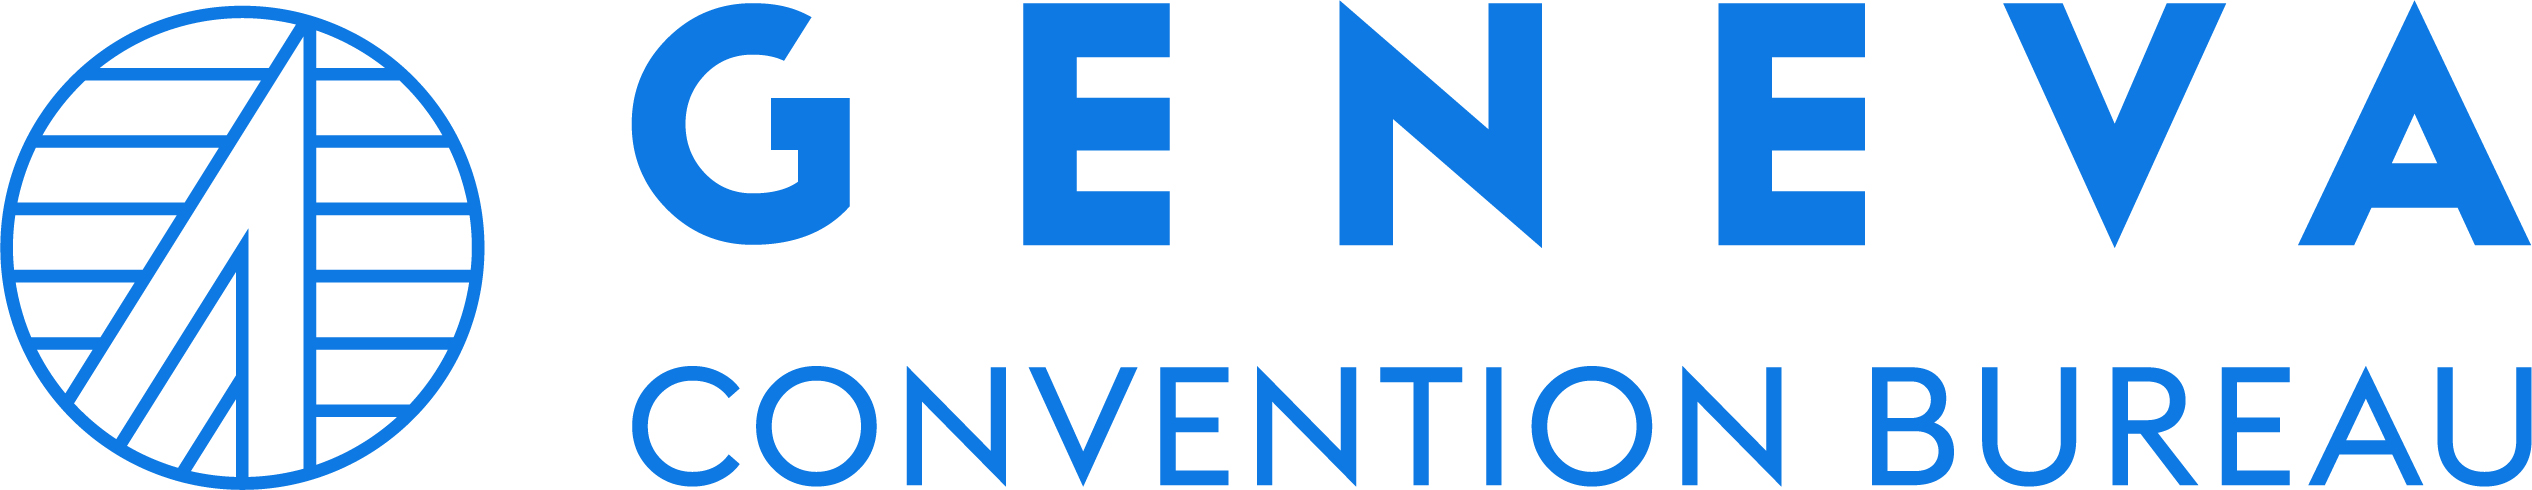 Geneva Convention Bureau logo